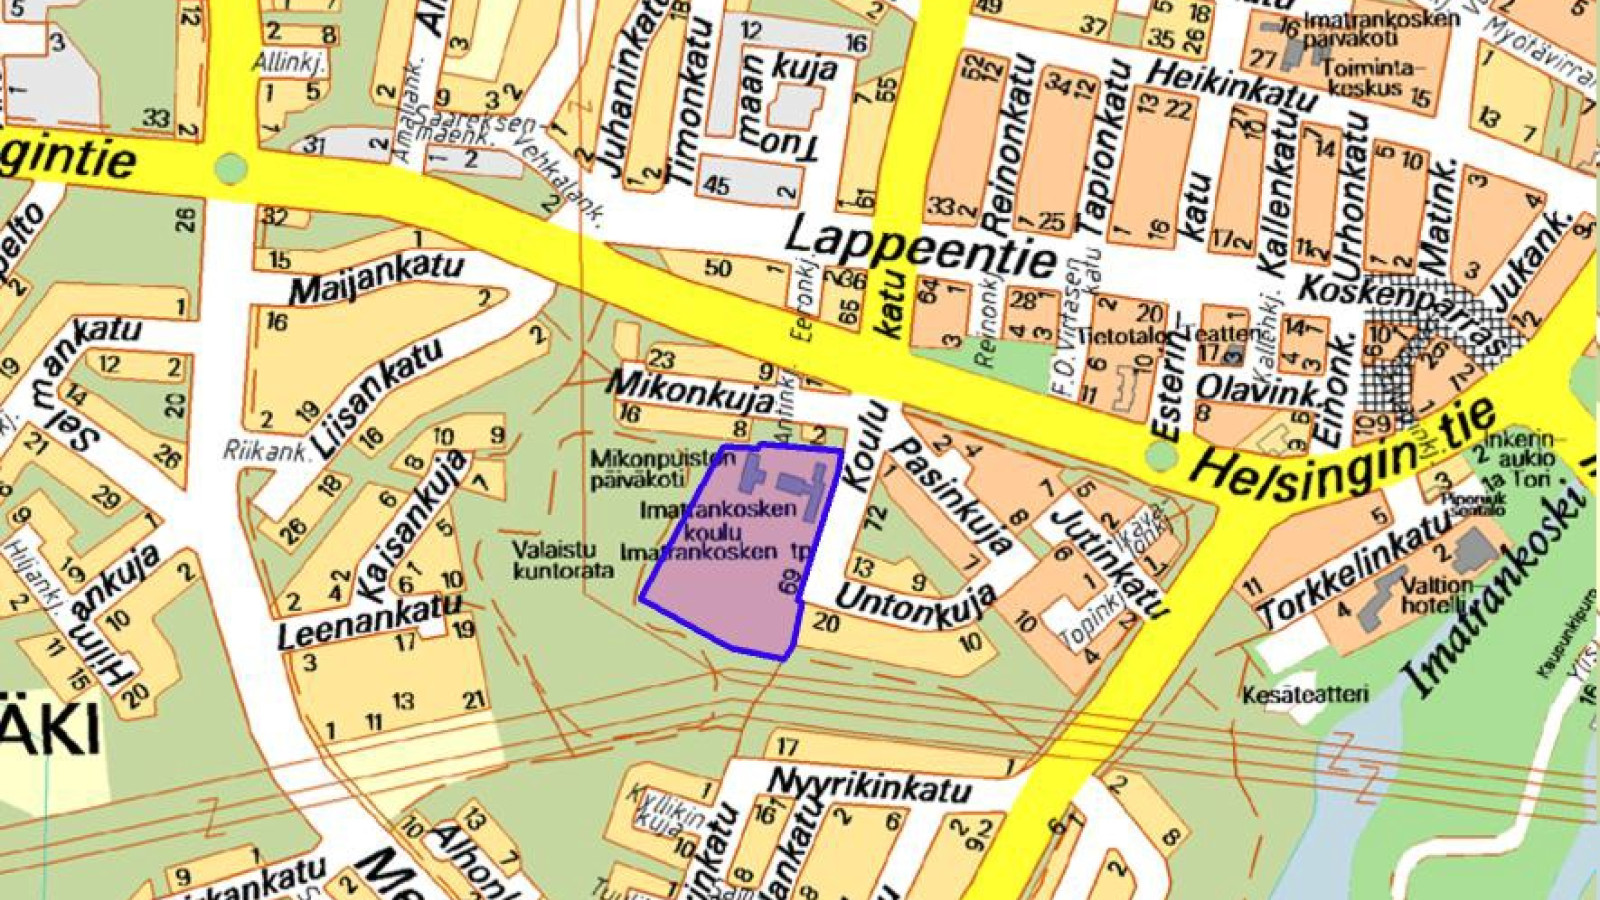 Imatrankoski school site plan proposal for viewing | the city of Imatra